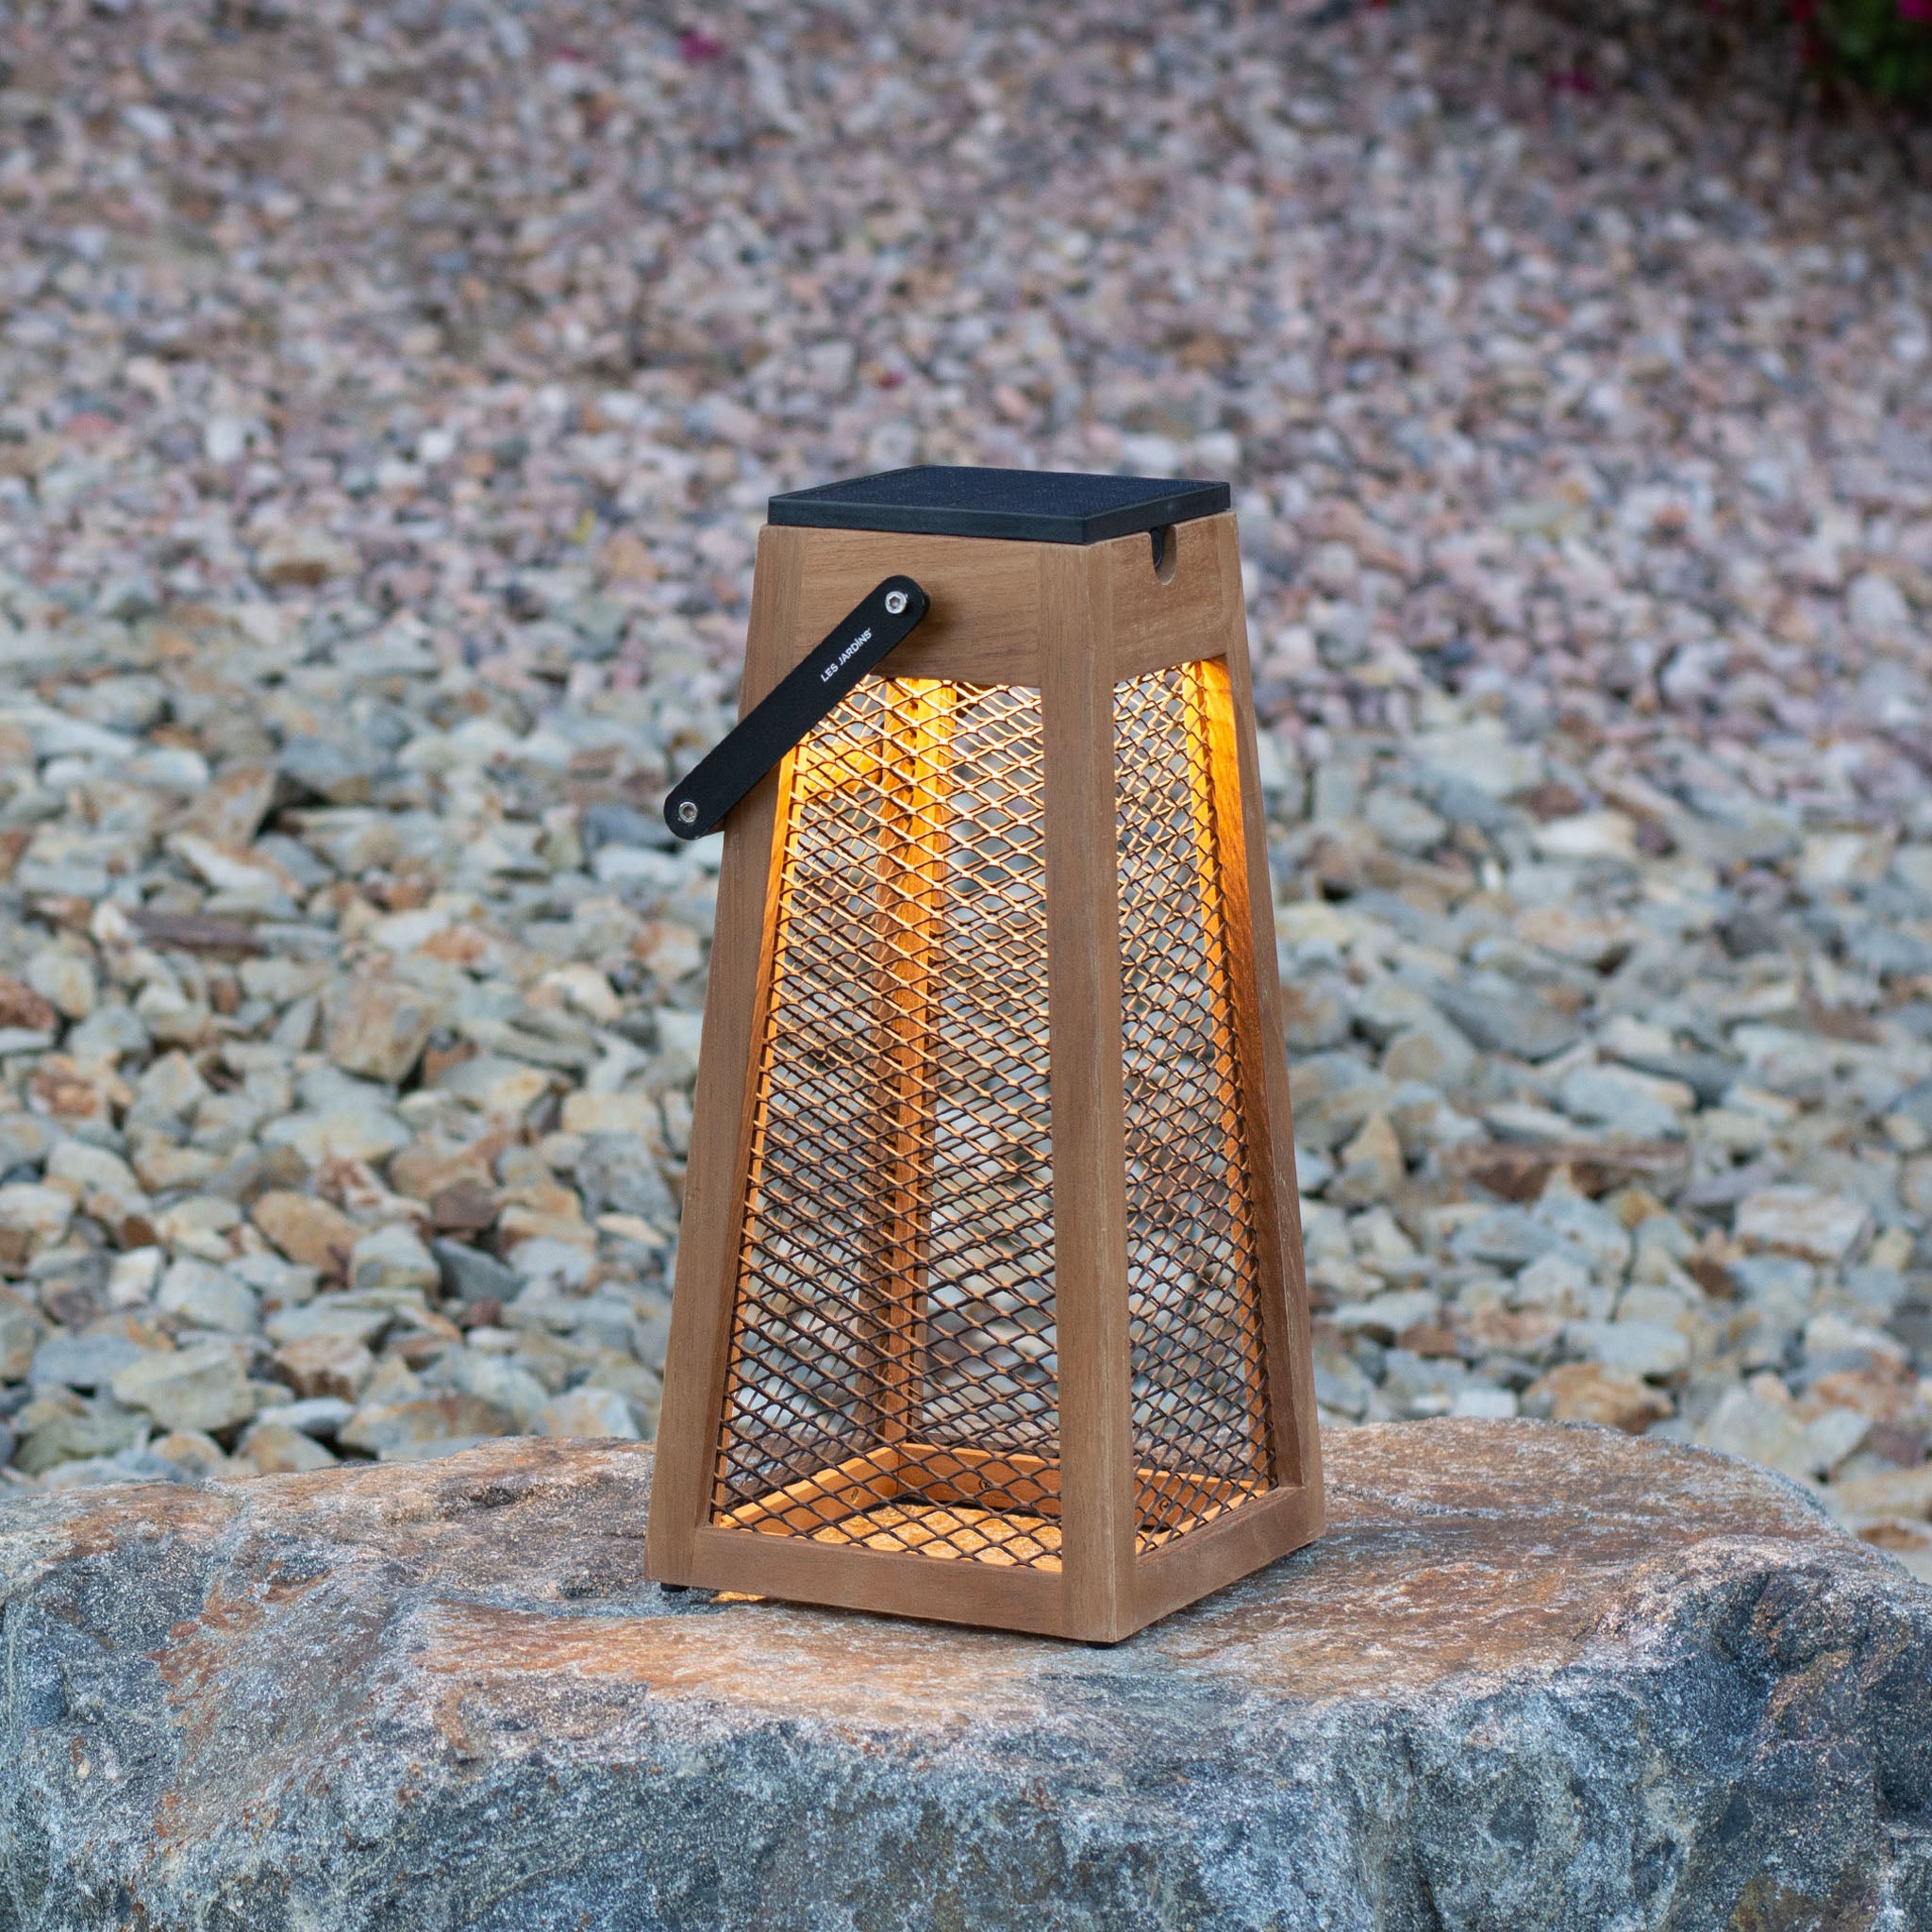 Roam solar lantern steel mesh on rocks background